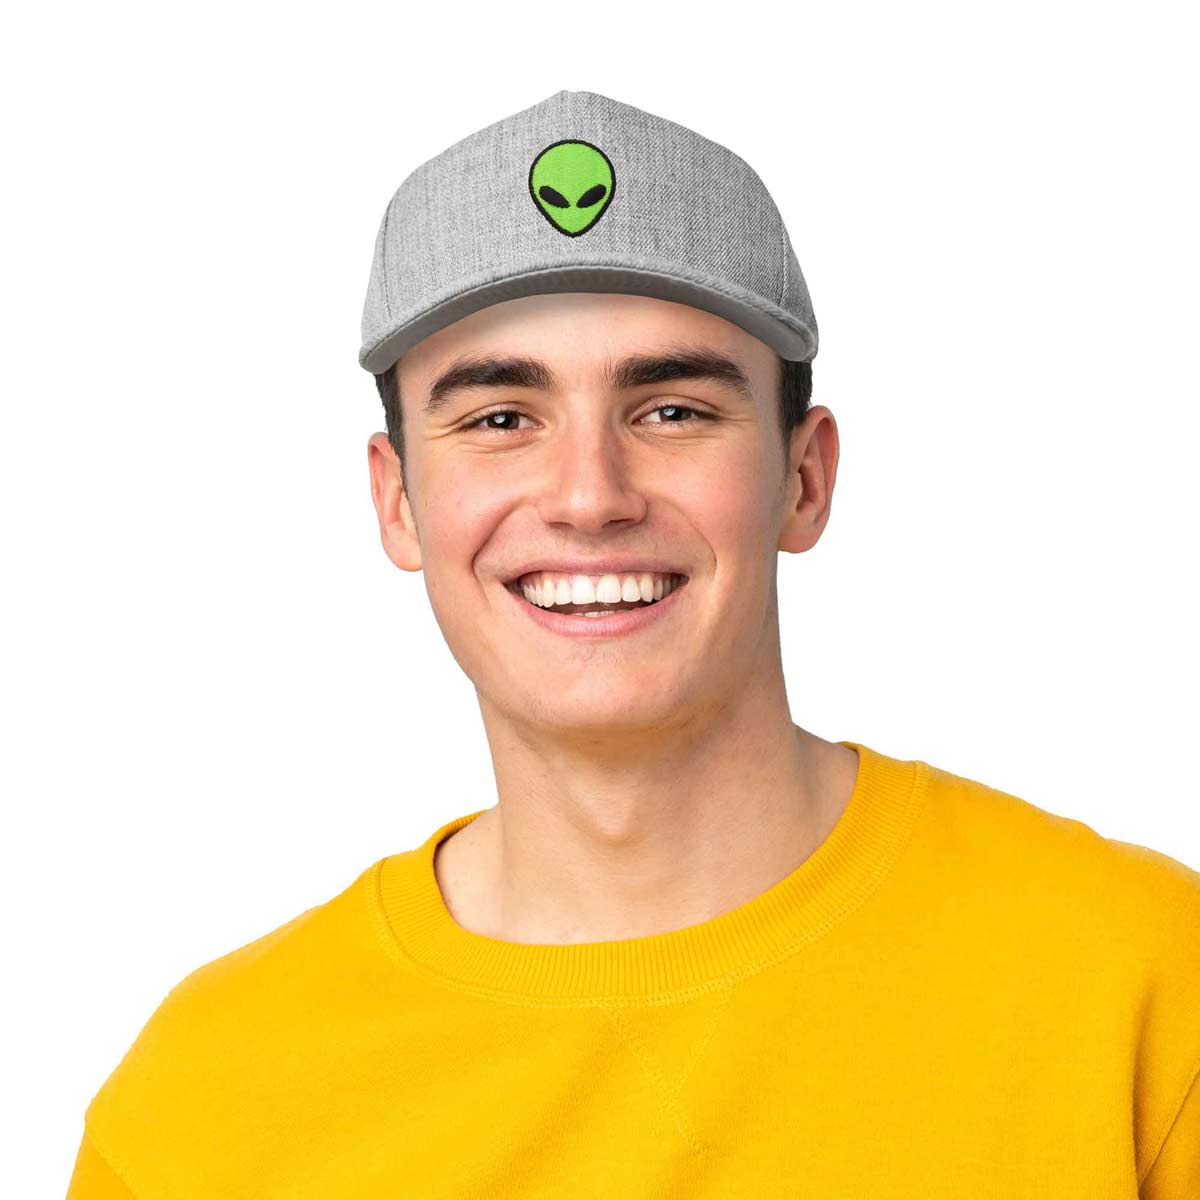 Dalix Alien Snapback Hat